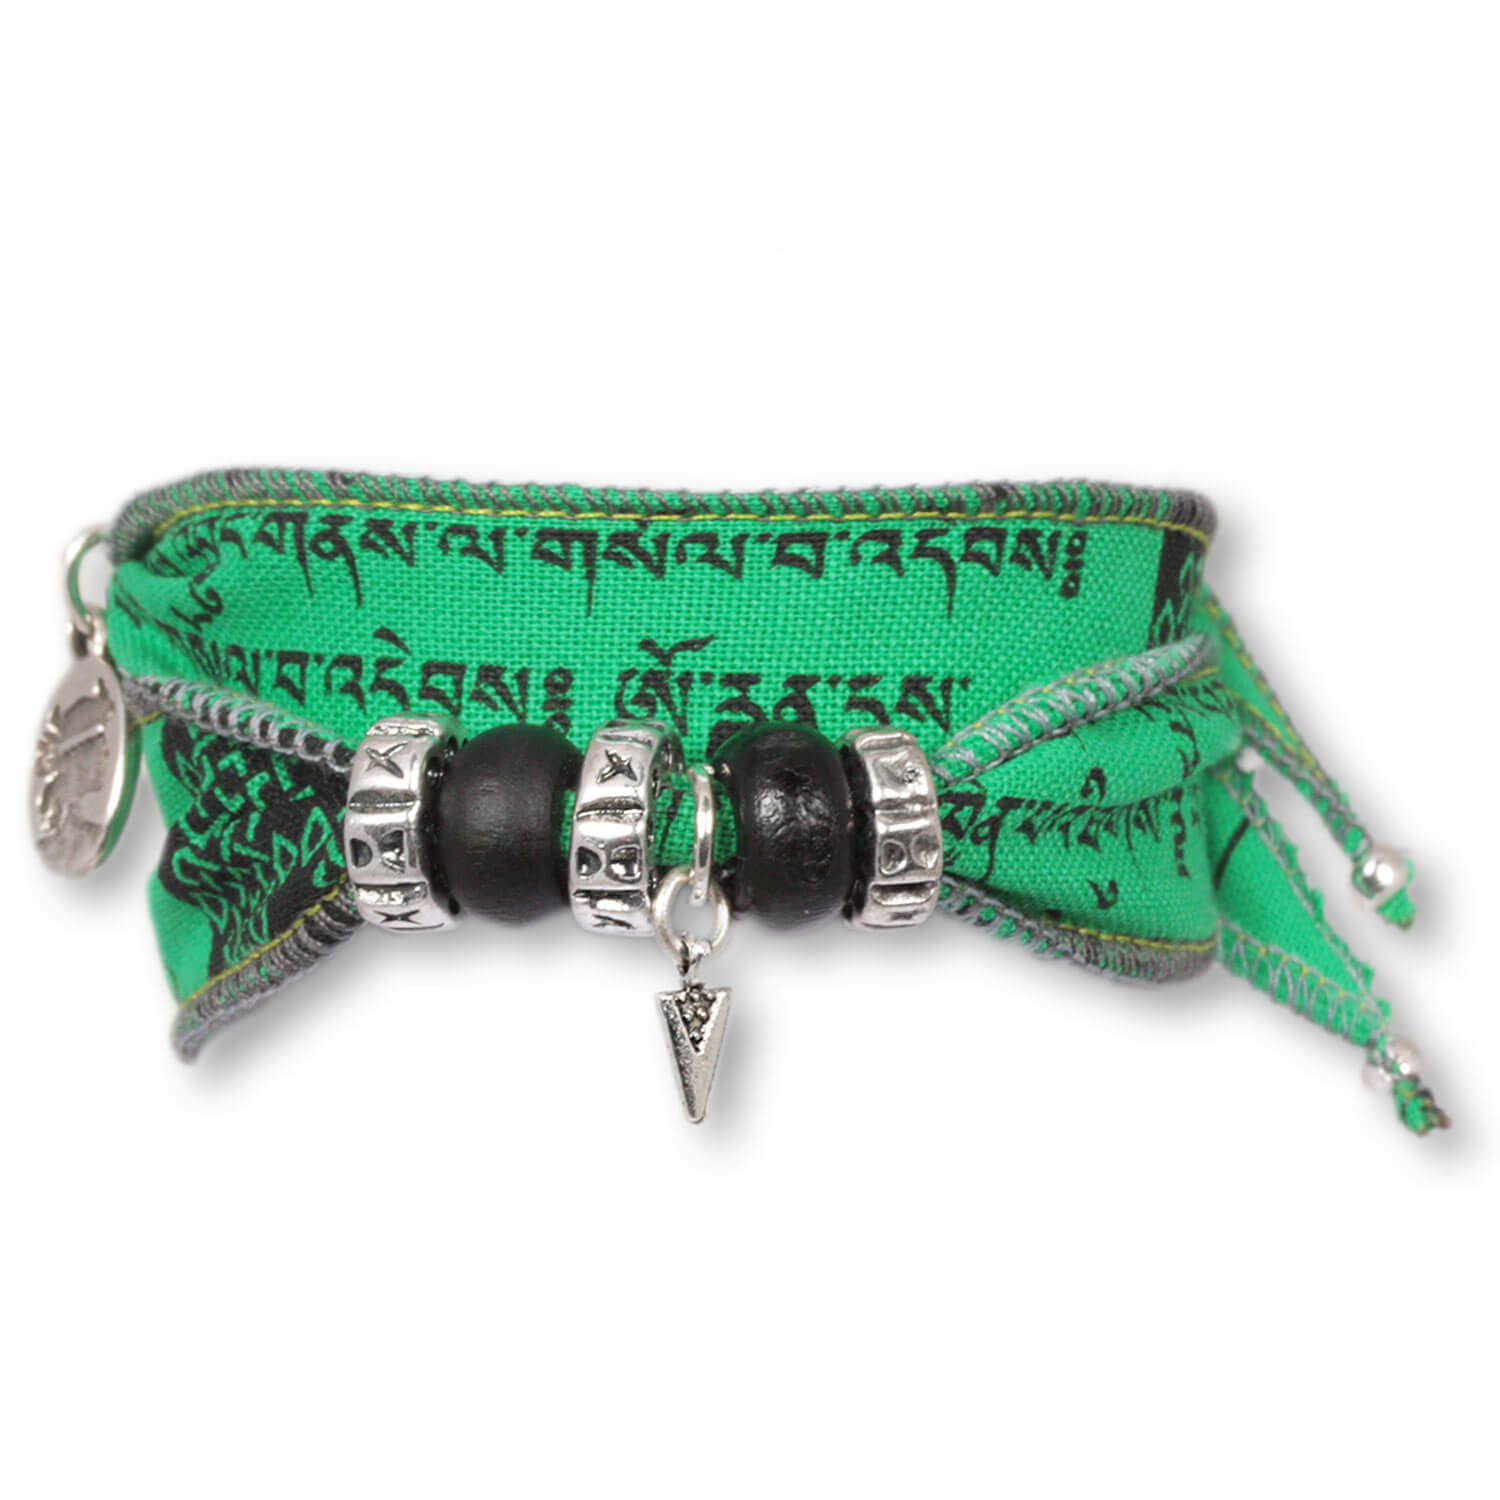 Water Arrow - Tibetan Wish bracelet made from Tibetan prayer flags